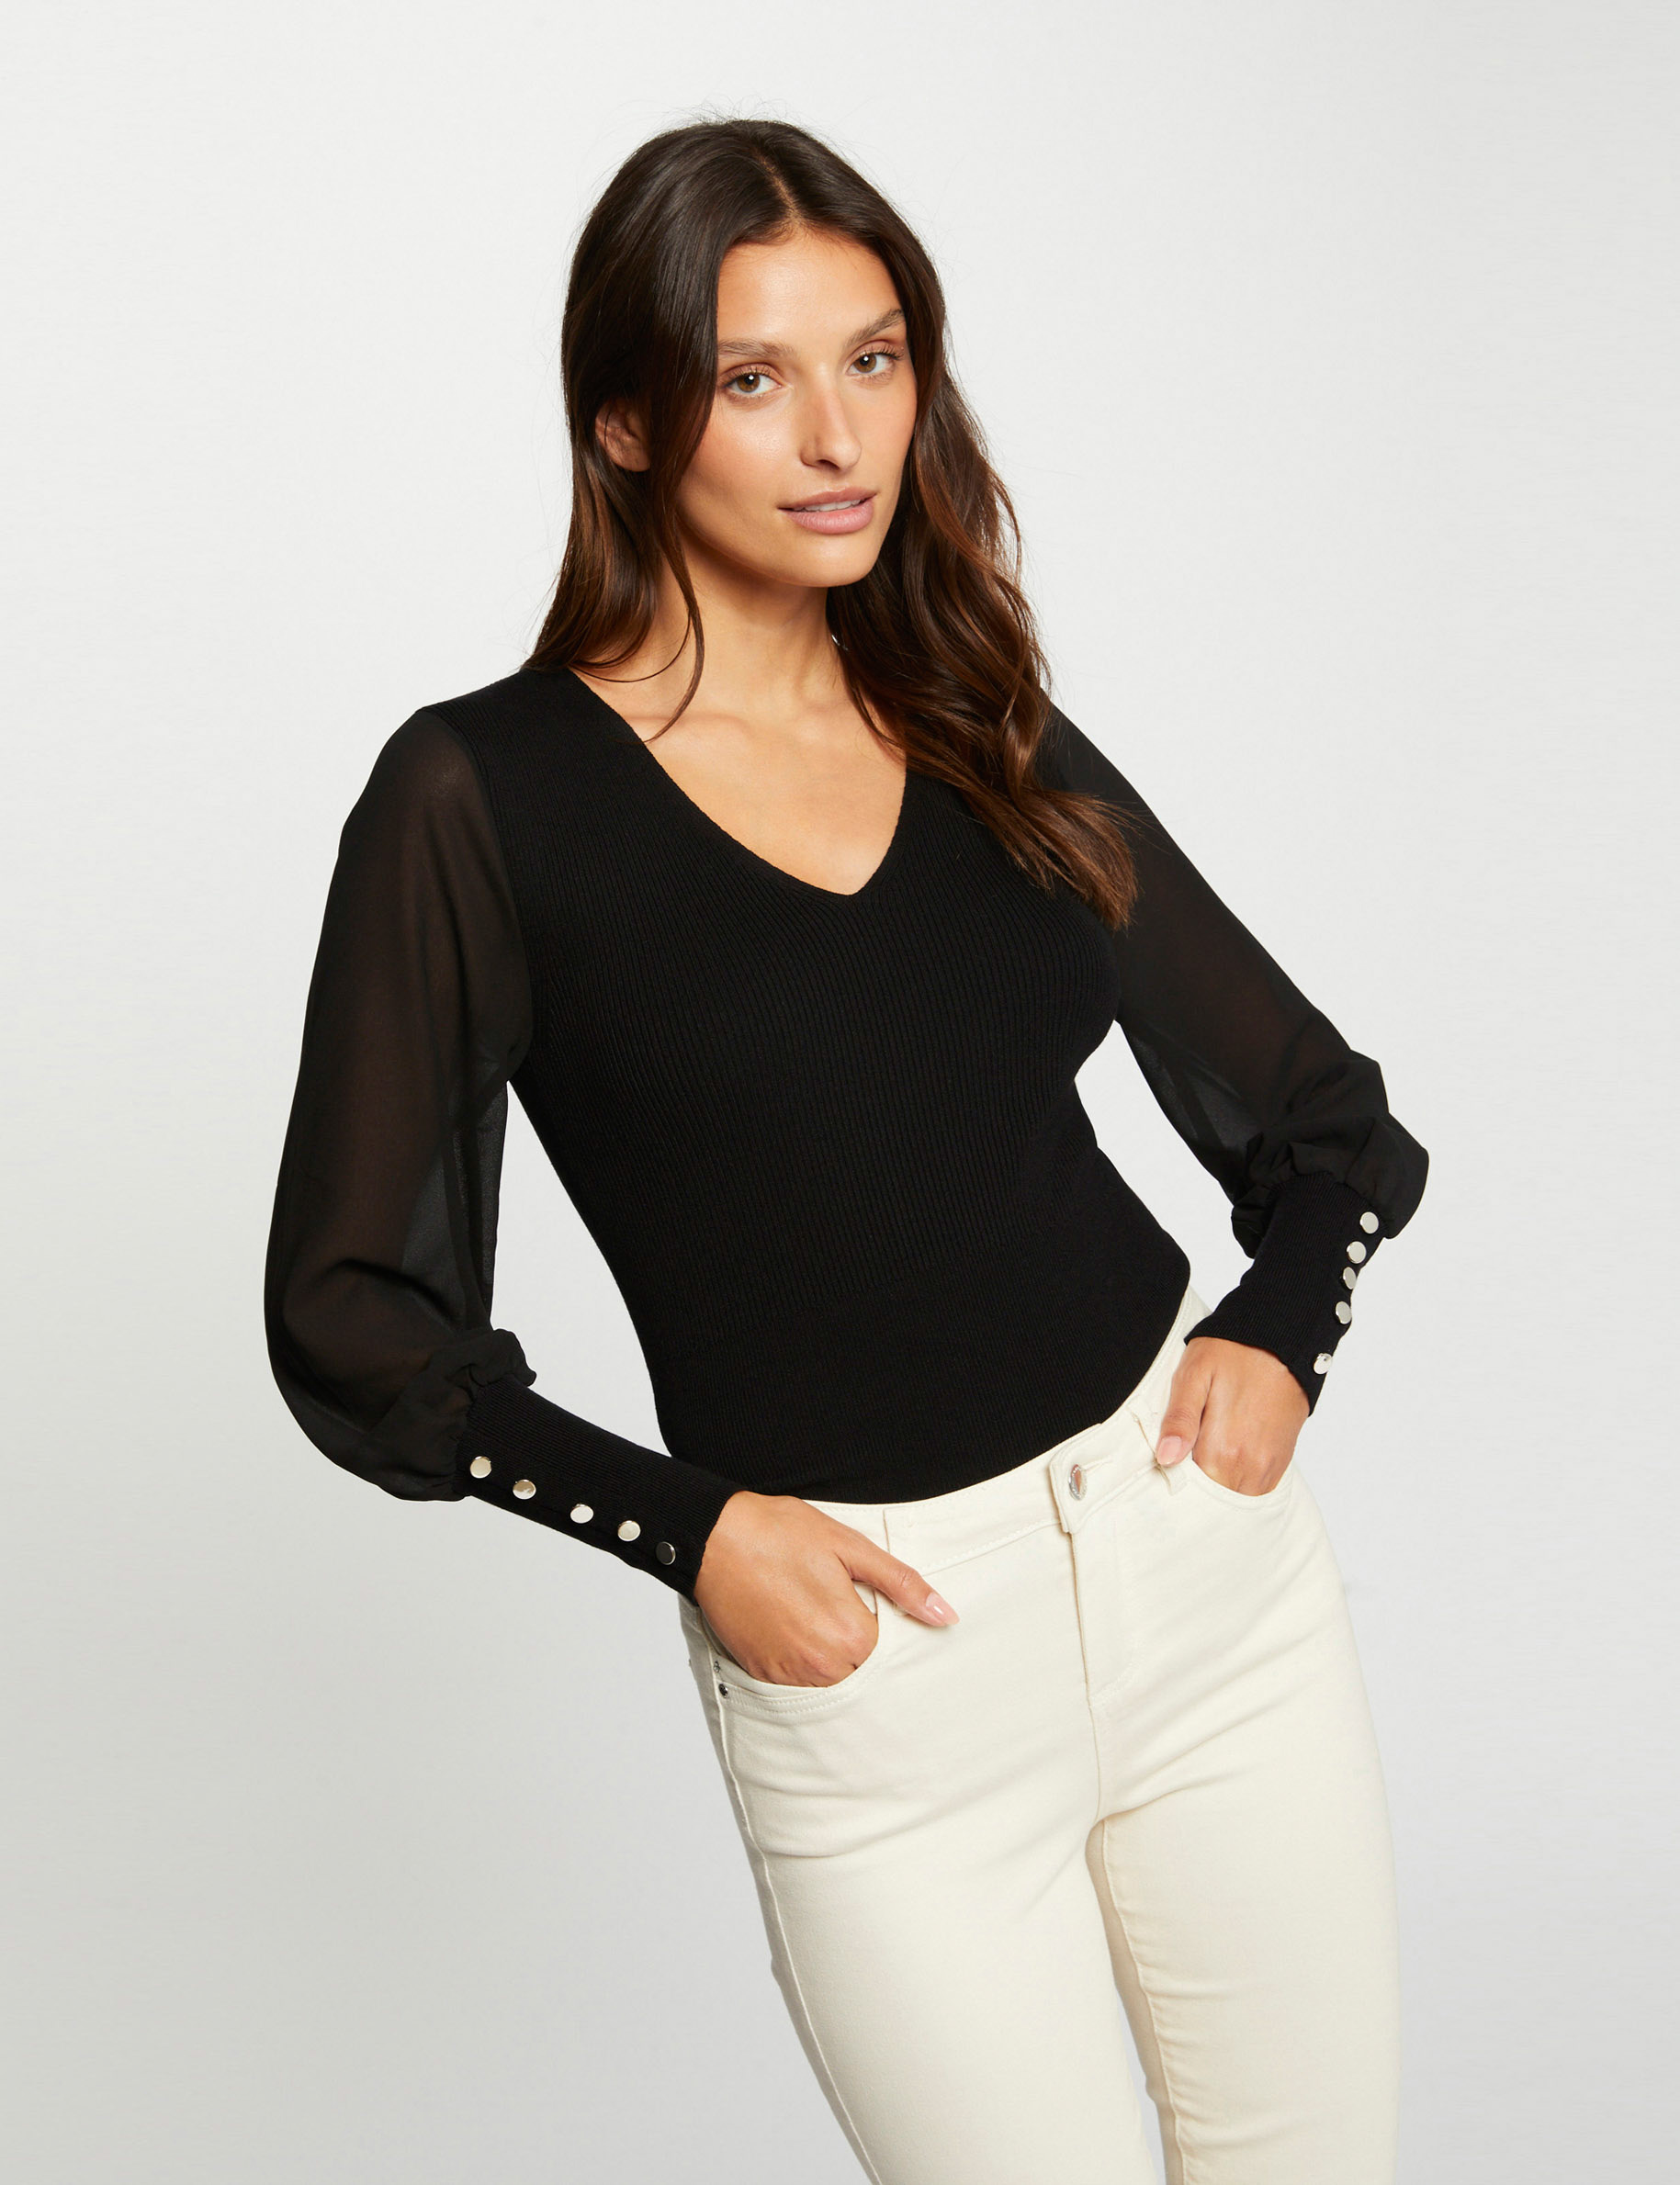 Jumper semi-transparent long sleeves black ladies' | Morgan